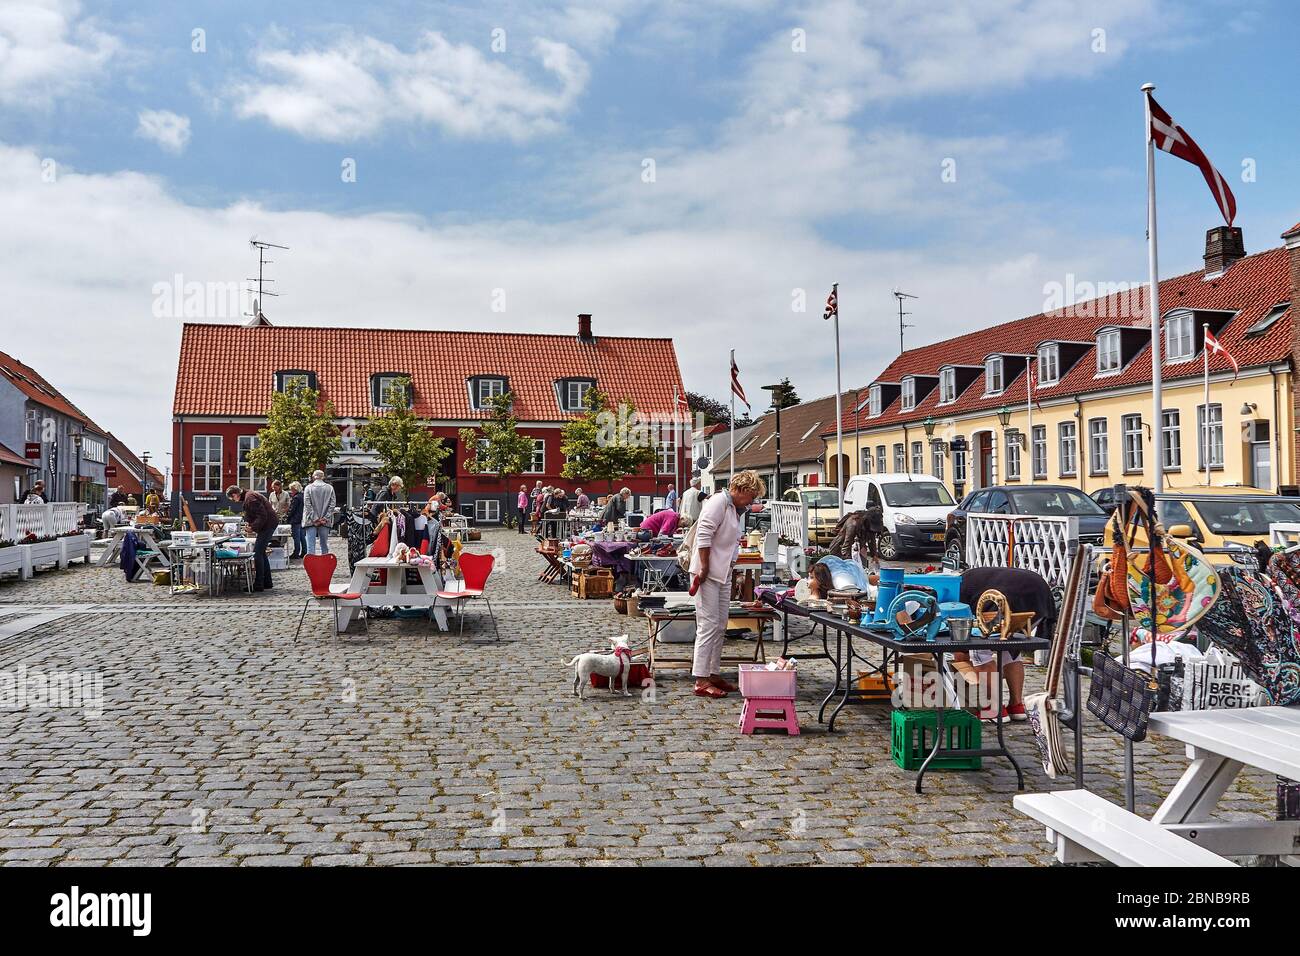 AAKIRKEBY, DENMARK - Jun 27, 2019: Aakirkeby, Bornholm island, Denmark - 27 June 2019. Local people trading goods in city market of Aakirkeby, Bornhol Stock Photo